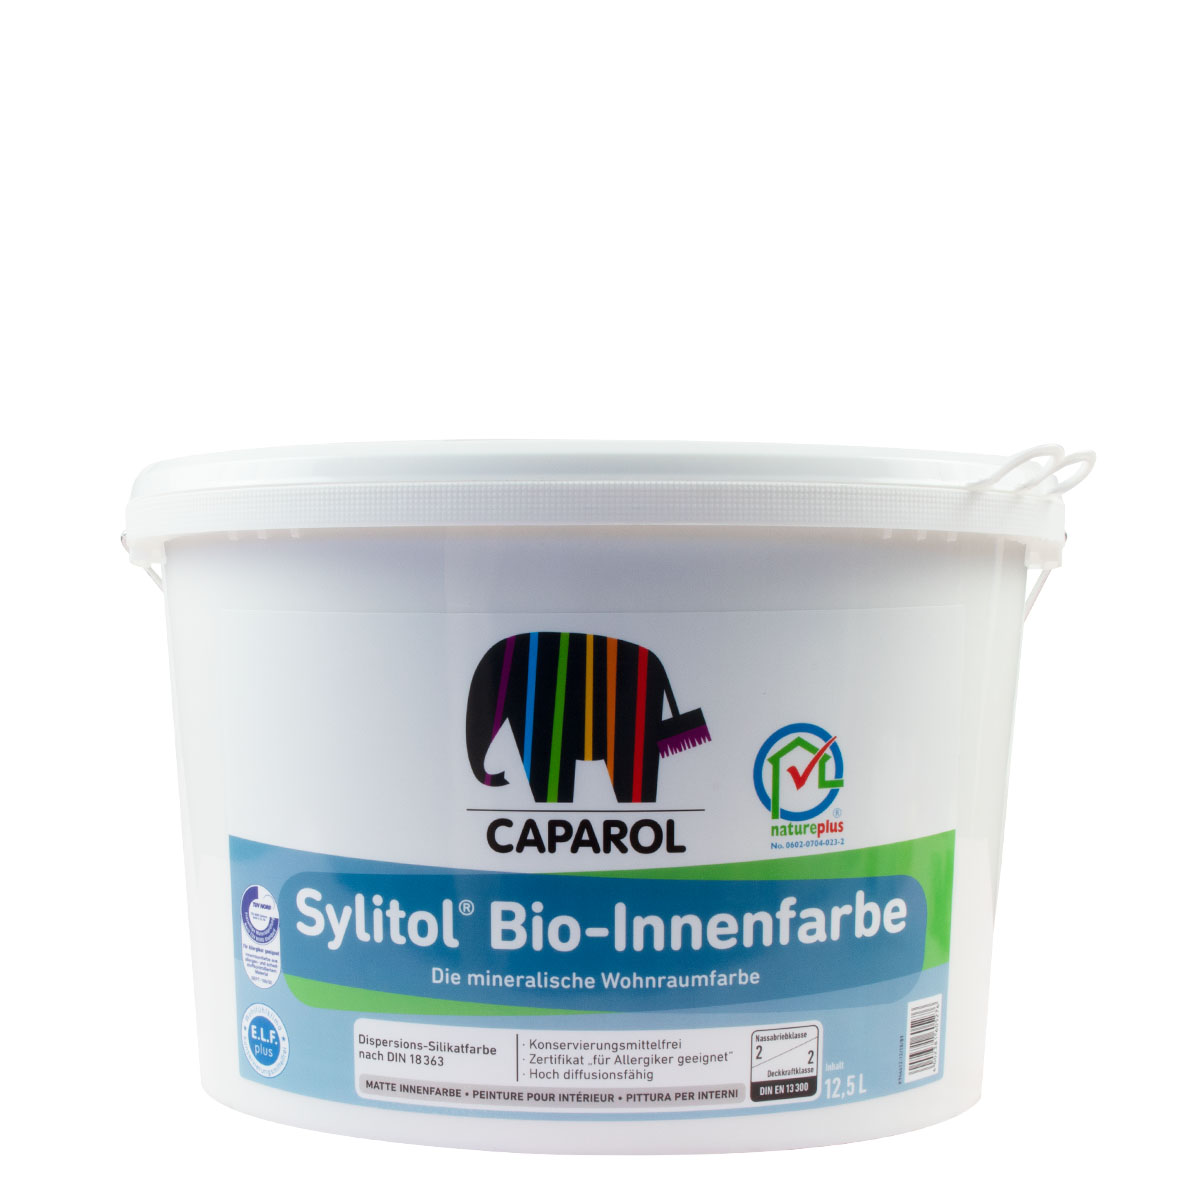 Caparol Sylitol Bio Innenfarbe 12,5L MIX PG B Allergiker geeignet